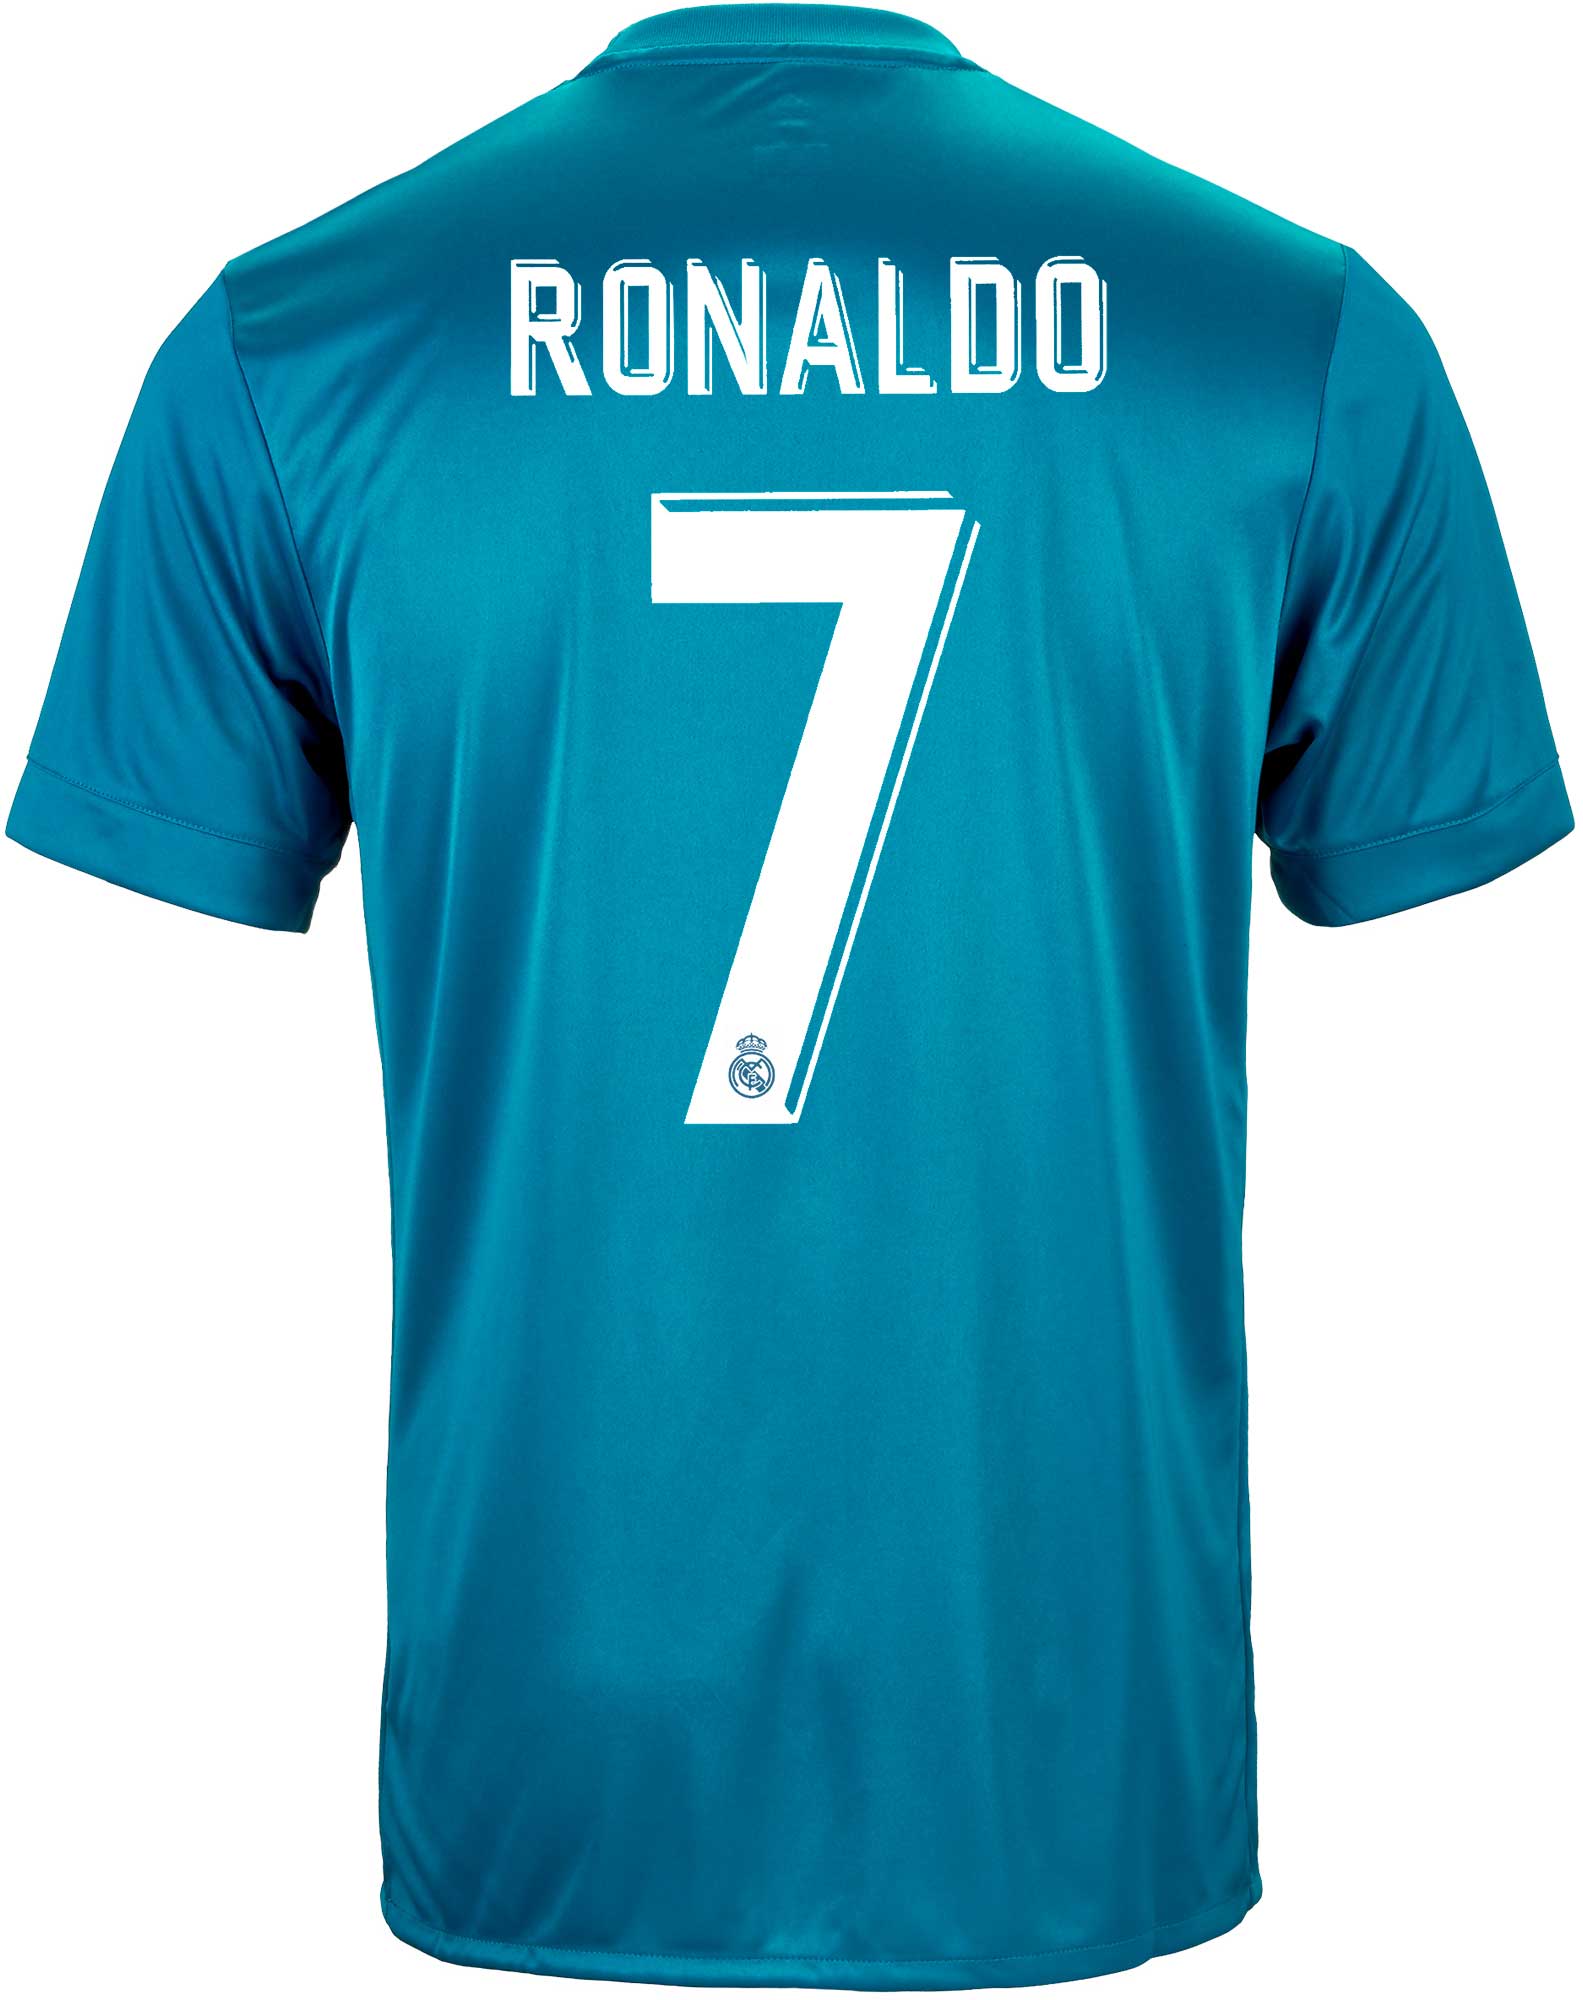 2017/18 adidas Kids Cristiano Ronaldo Real Madrid 3rd Jersey - SoccerPro